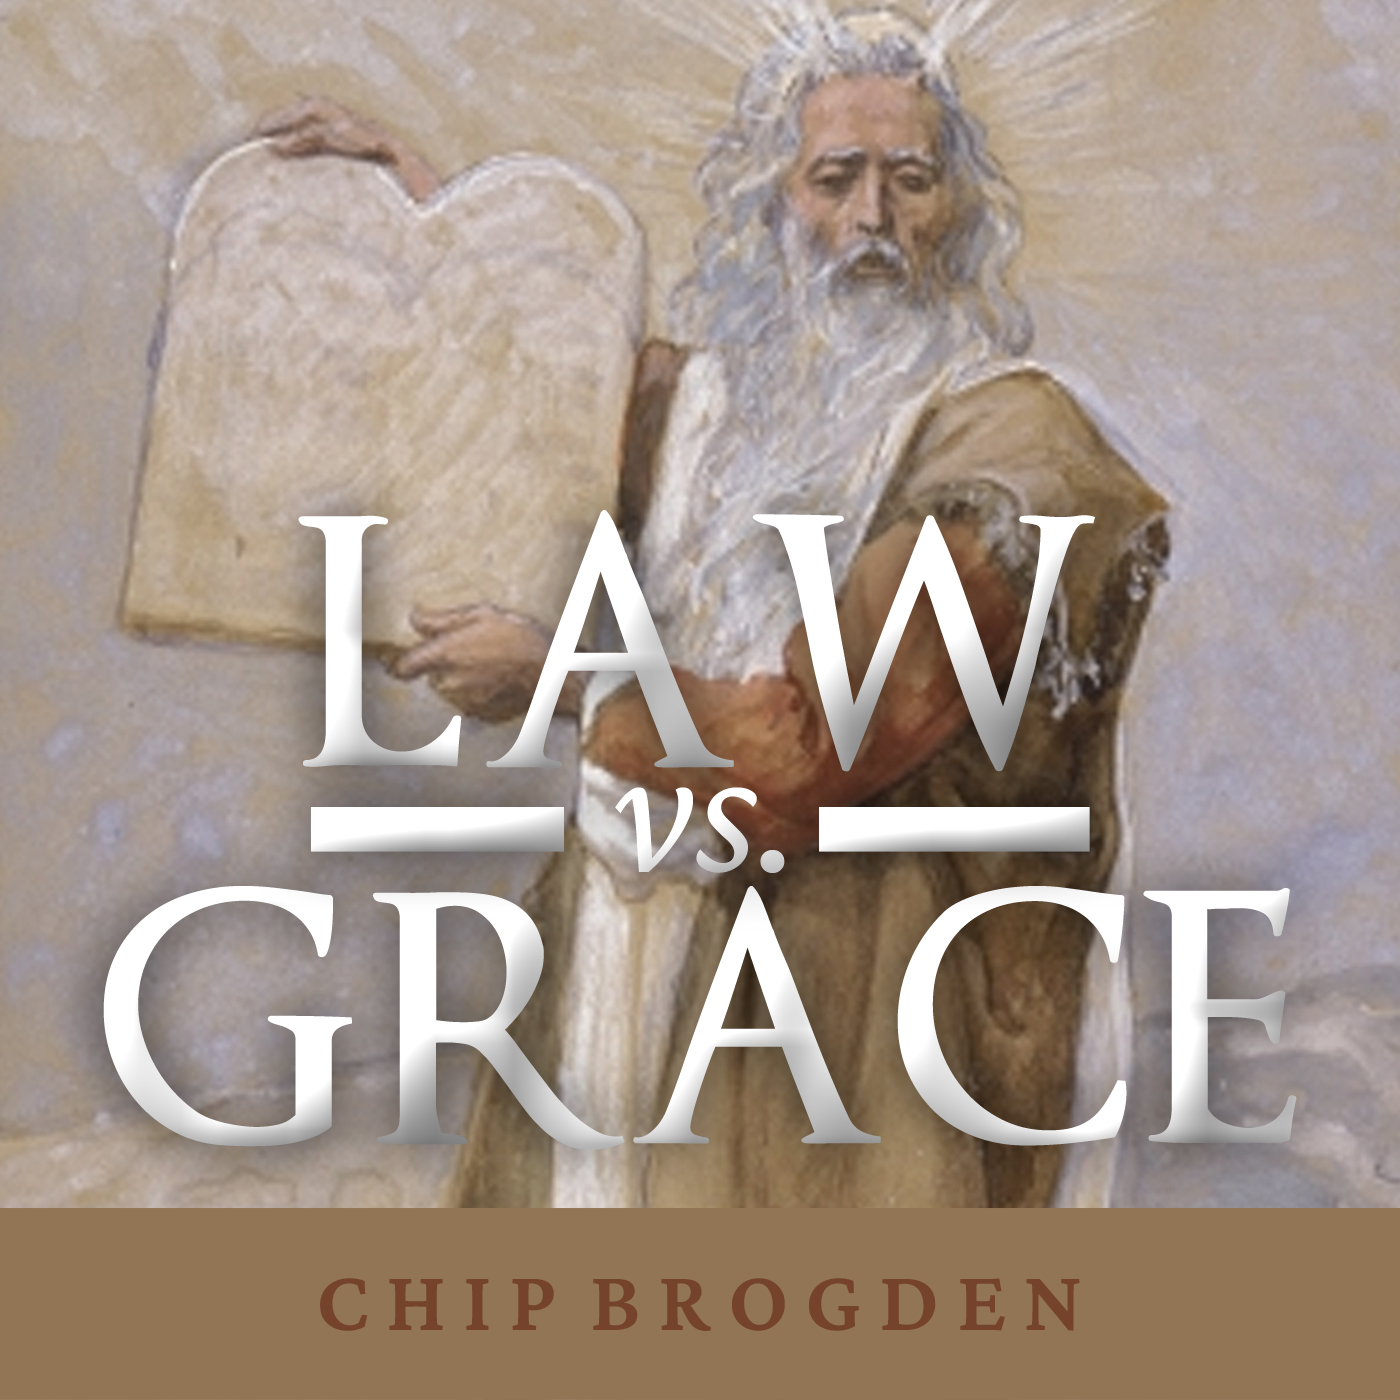 Law vs. Grace